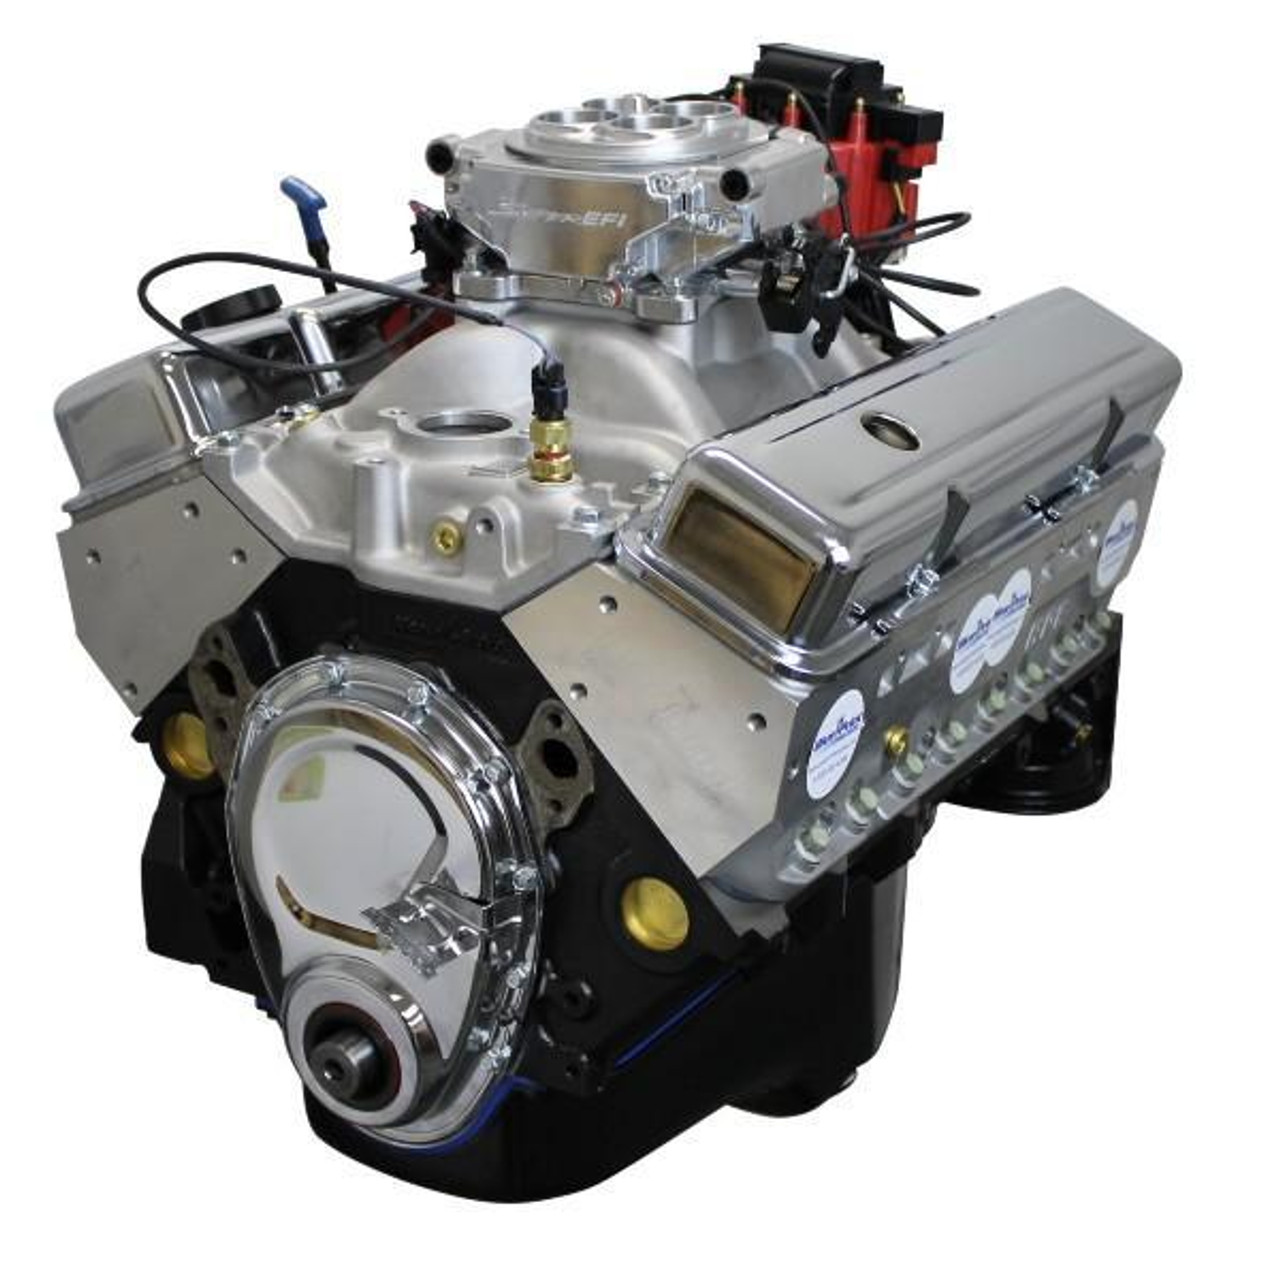 SBC EFI 350 Crate Engine 390 HP - 410 Lbs Torque